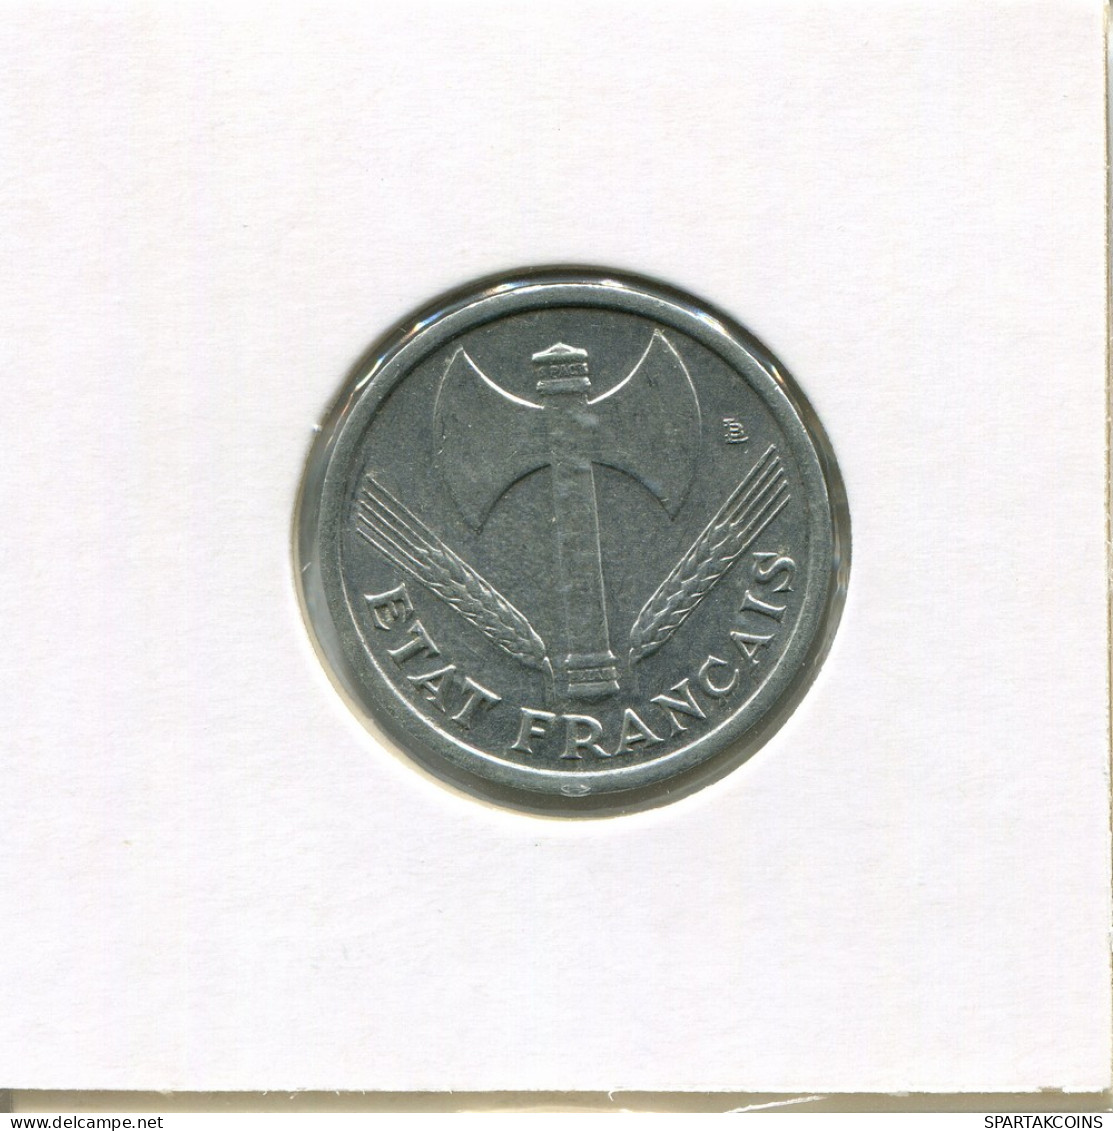 1 FRANC 1943 FRANCE Coin French Coin #AN278 - 1 Franc